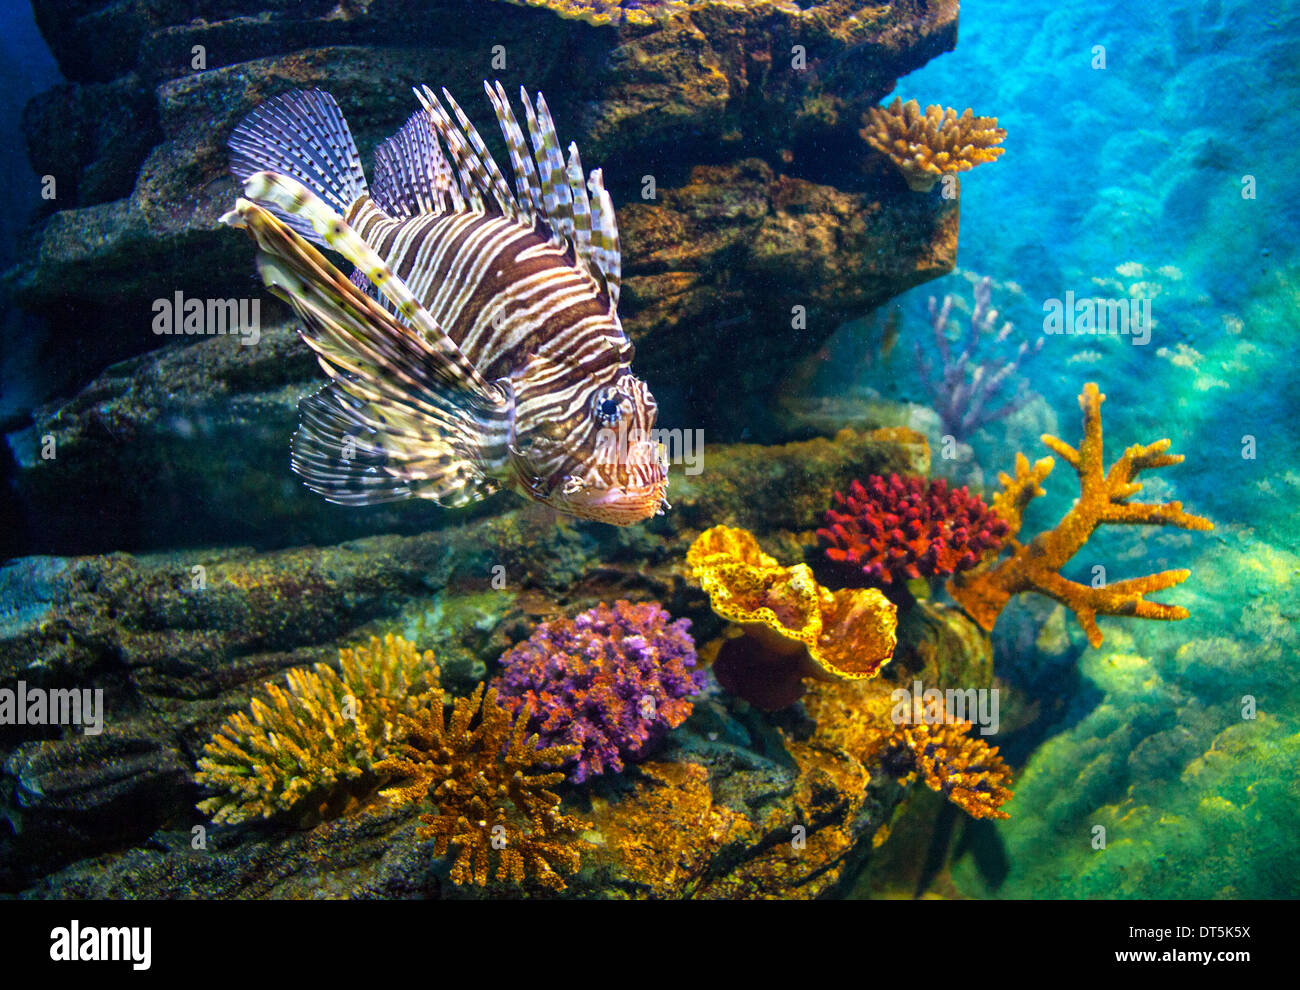 Juvenile lionfish over multicolored corals. Stock Photo